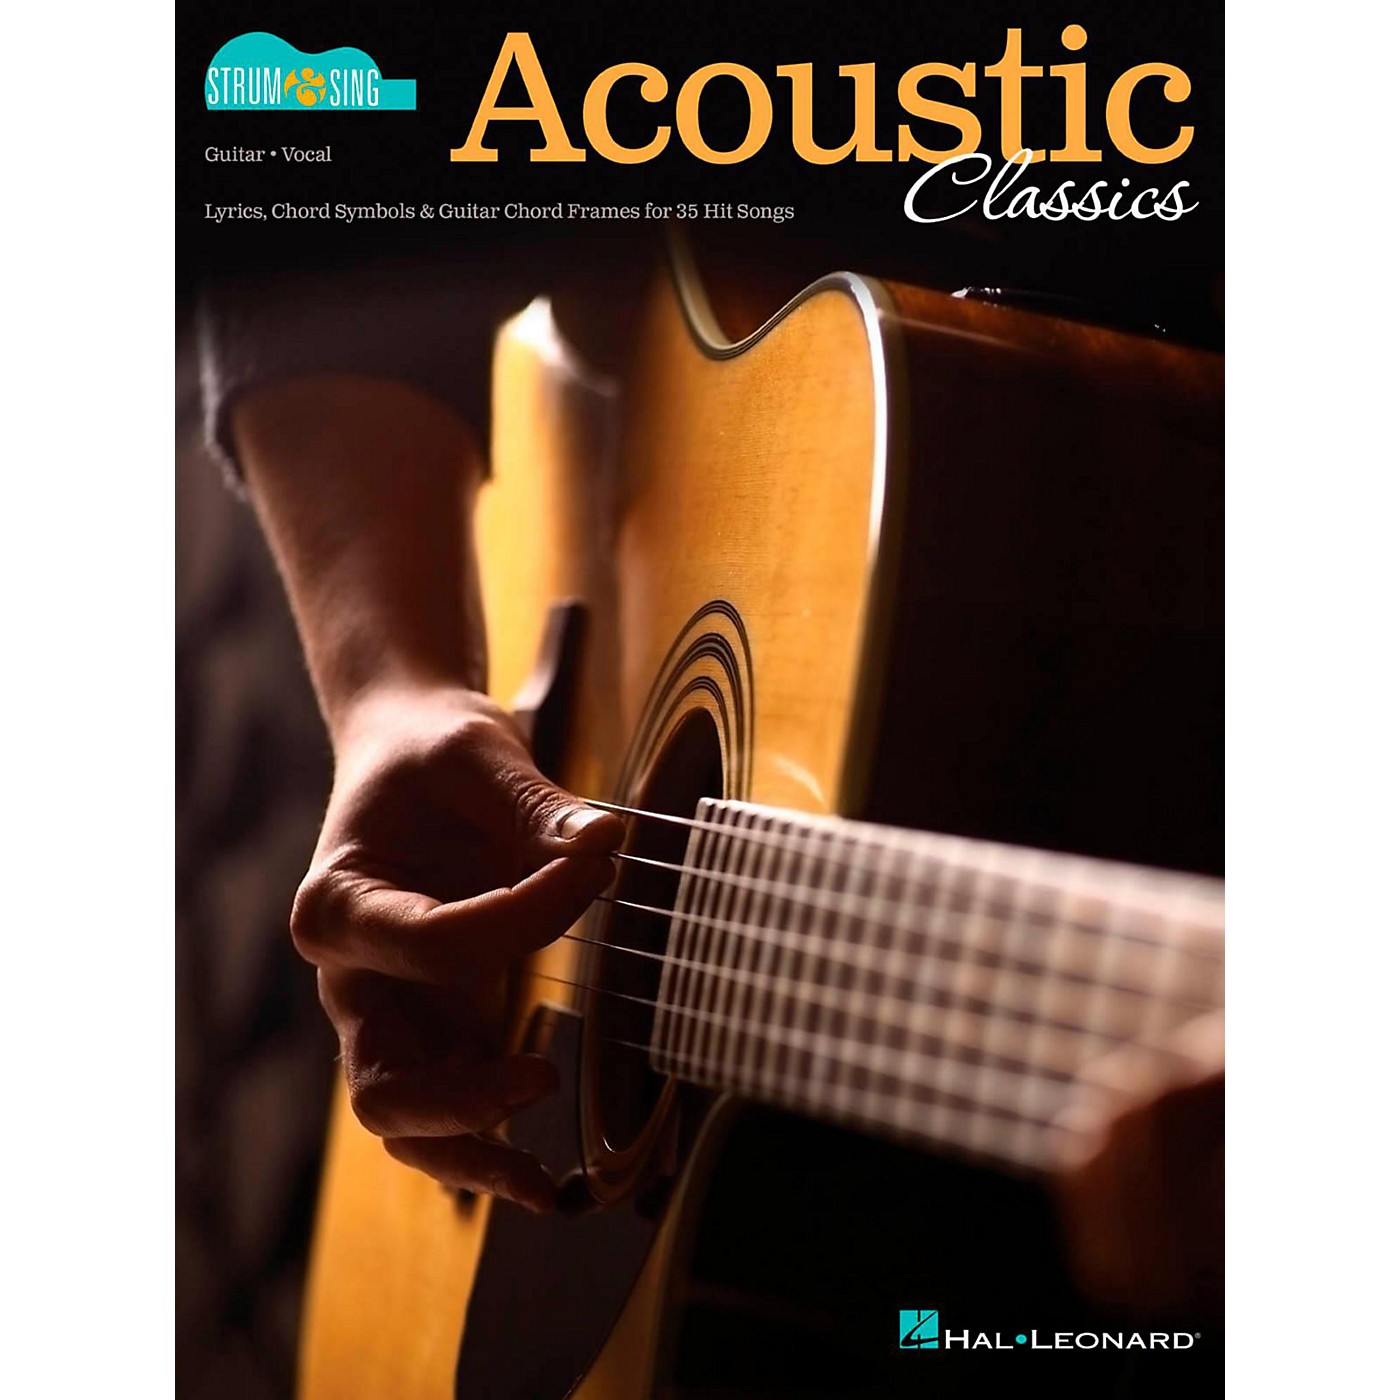 Hal Leonard Acoustic Classics - Strum & Sing Series for Guitar thumbnail